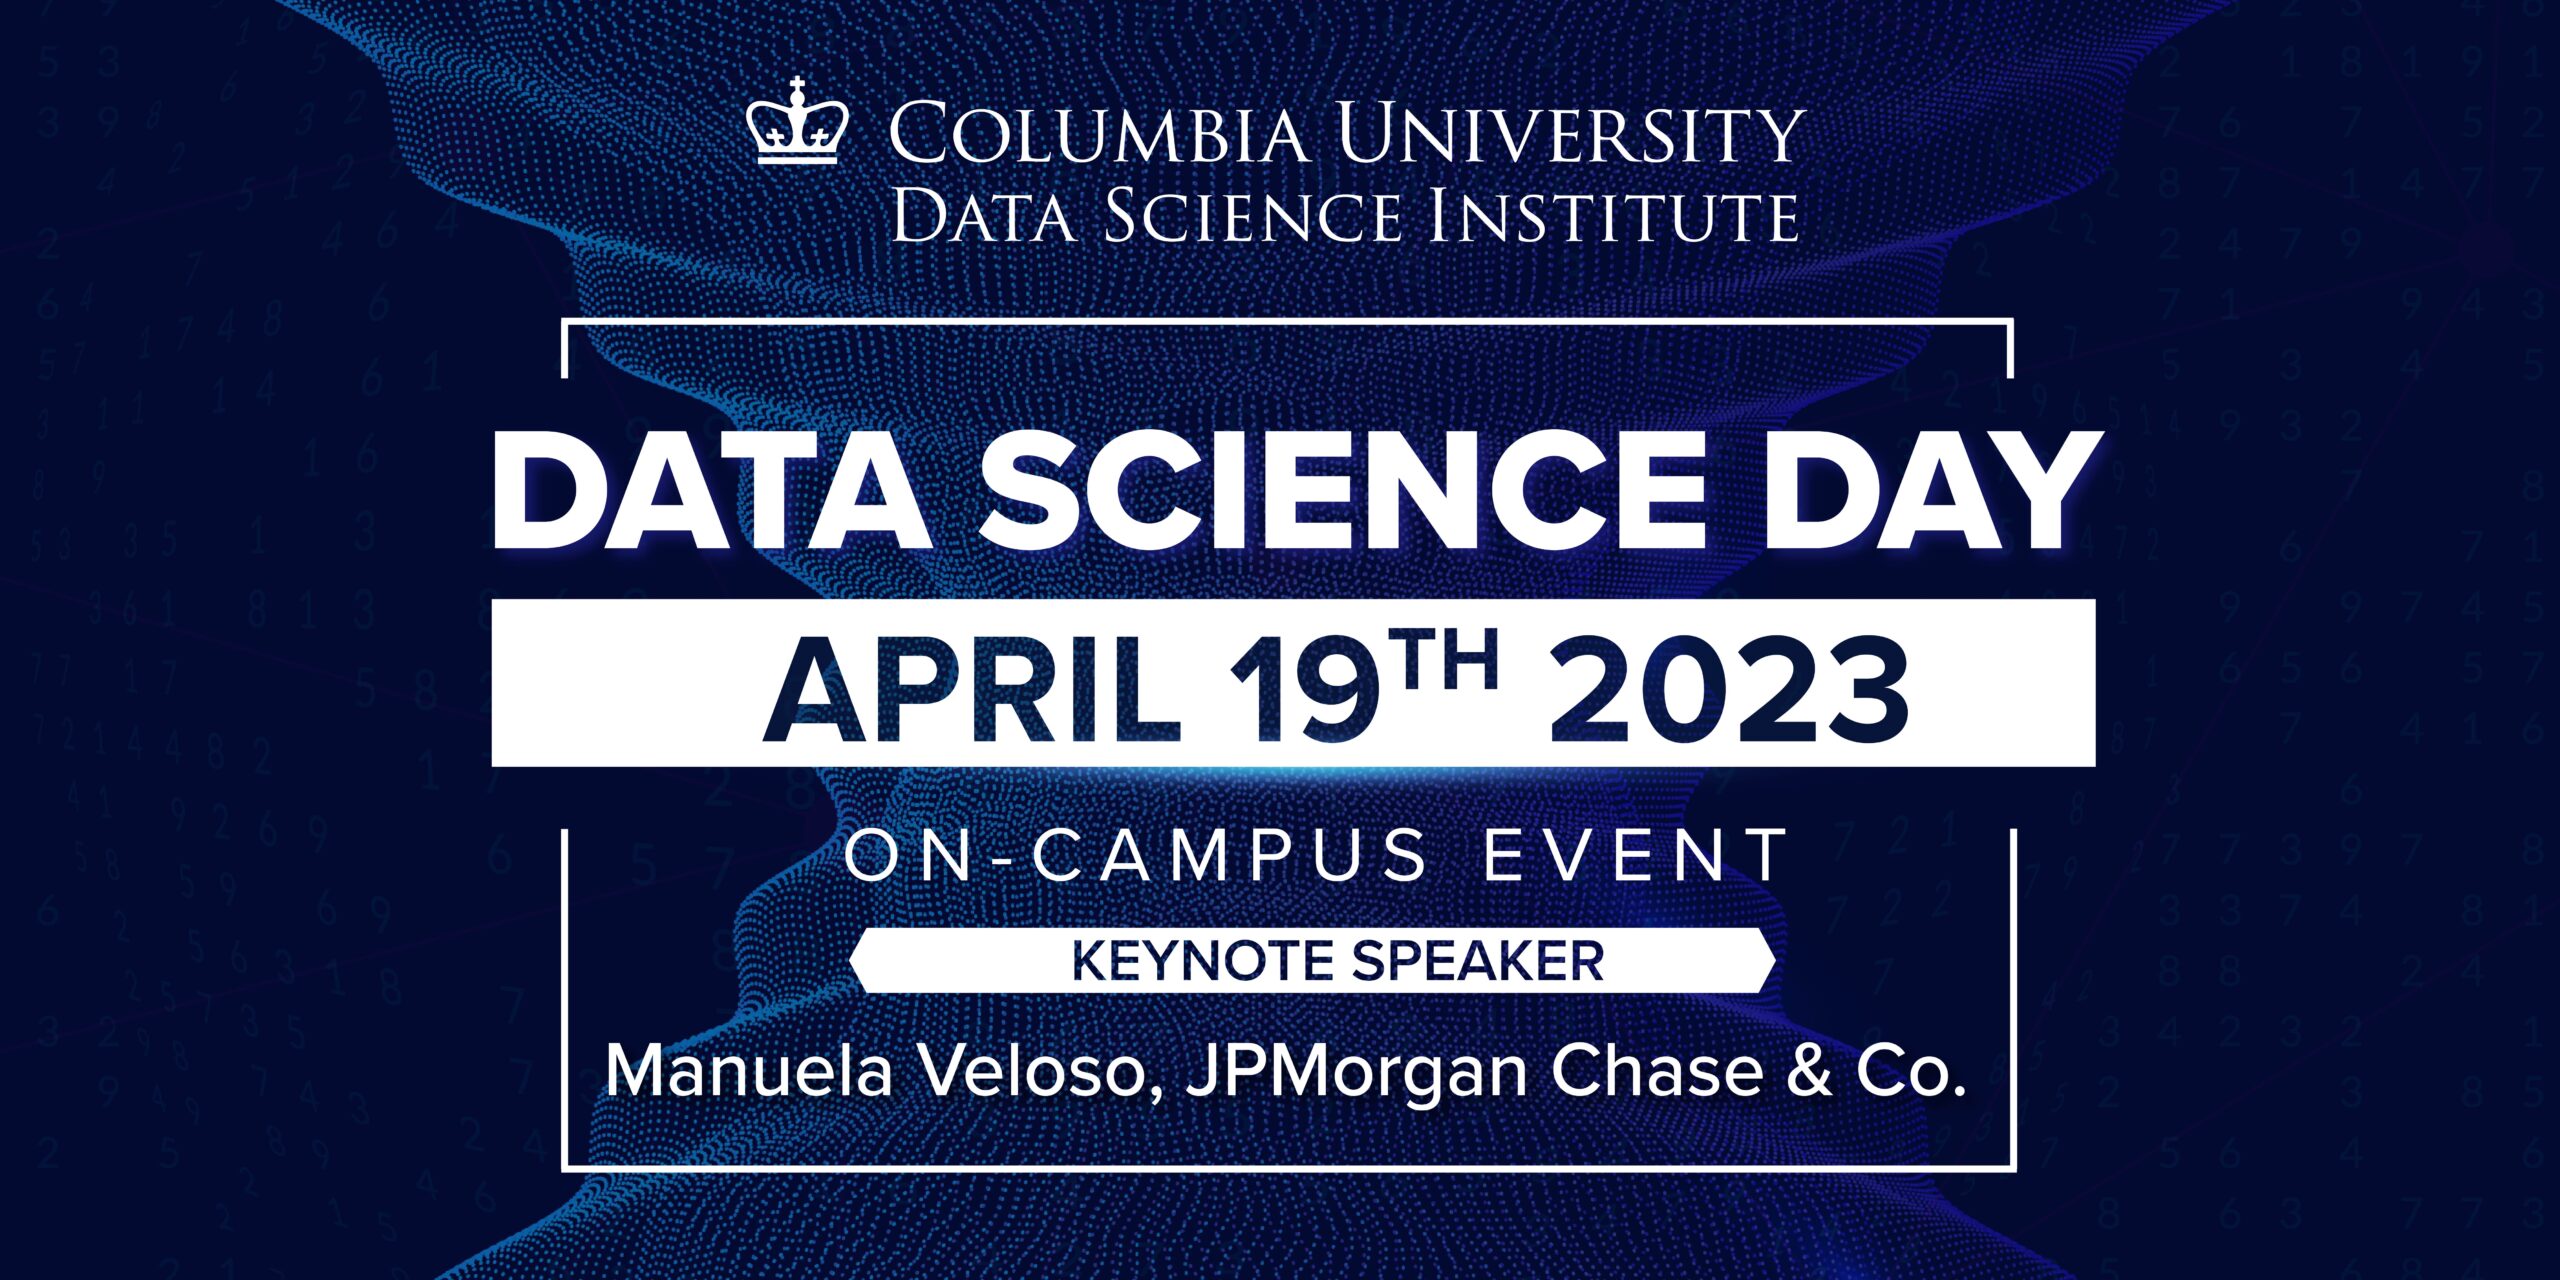 phd data science columbia university